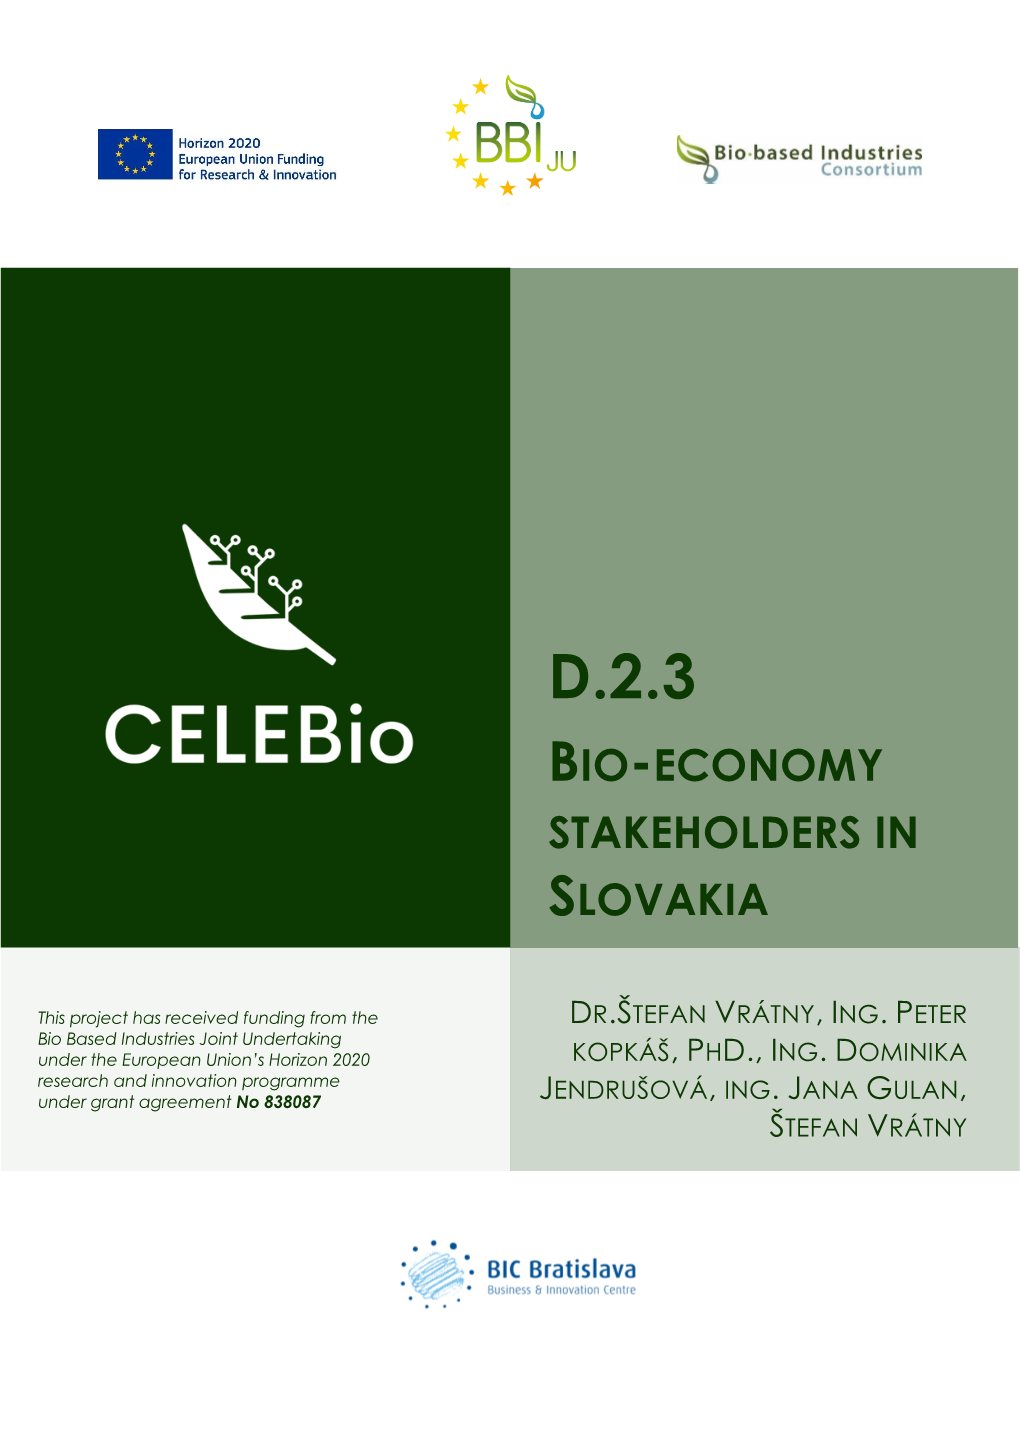 Bio-Economy Stakeholders in Slovakia